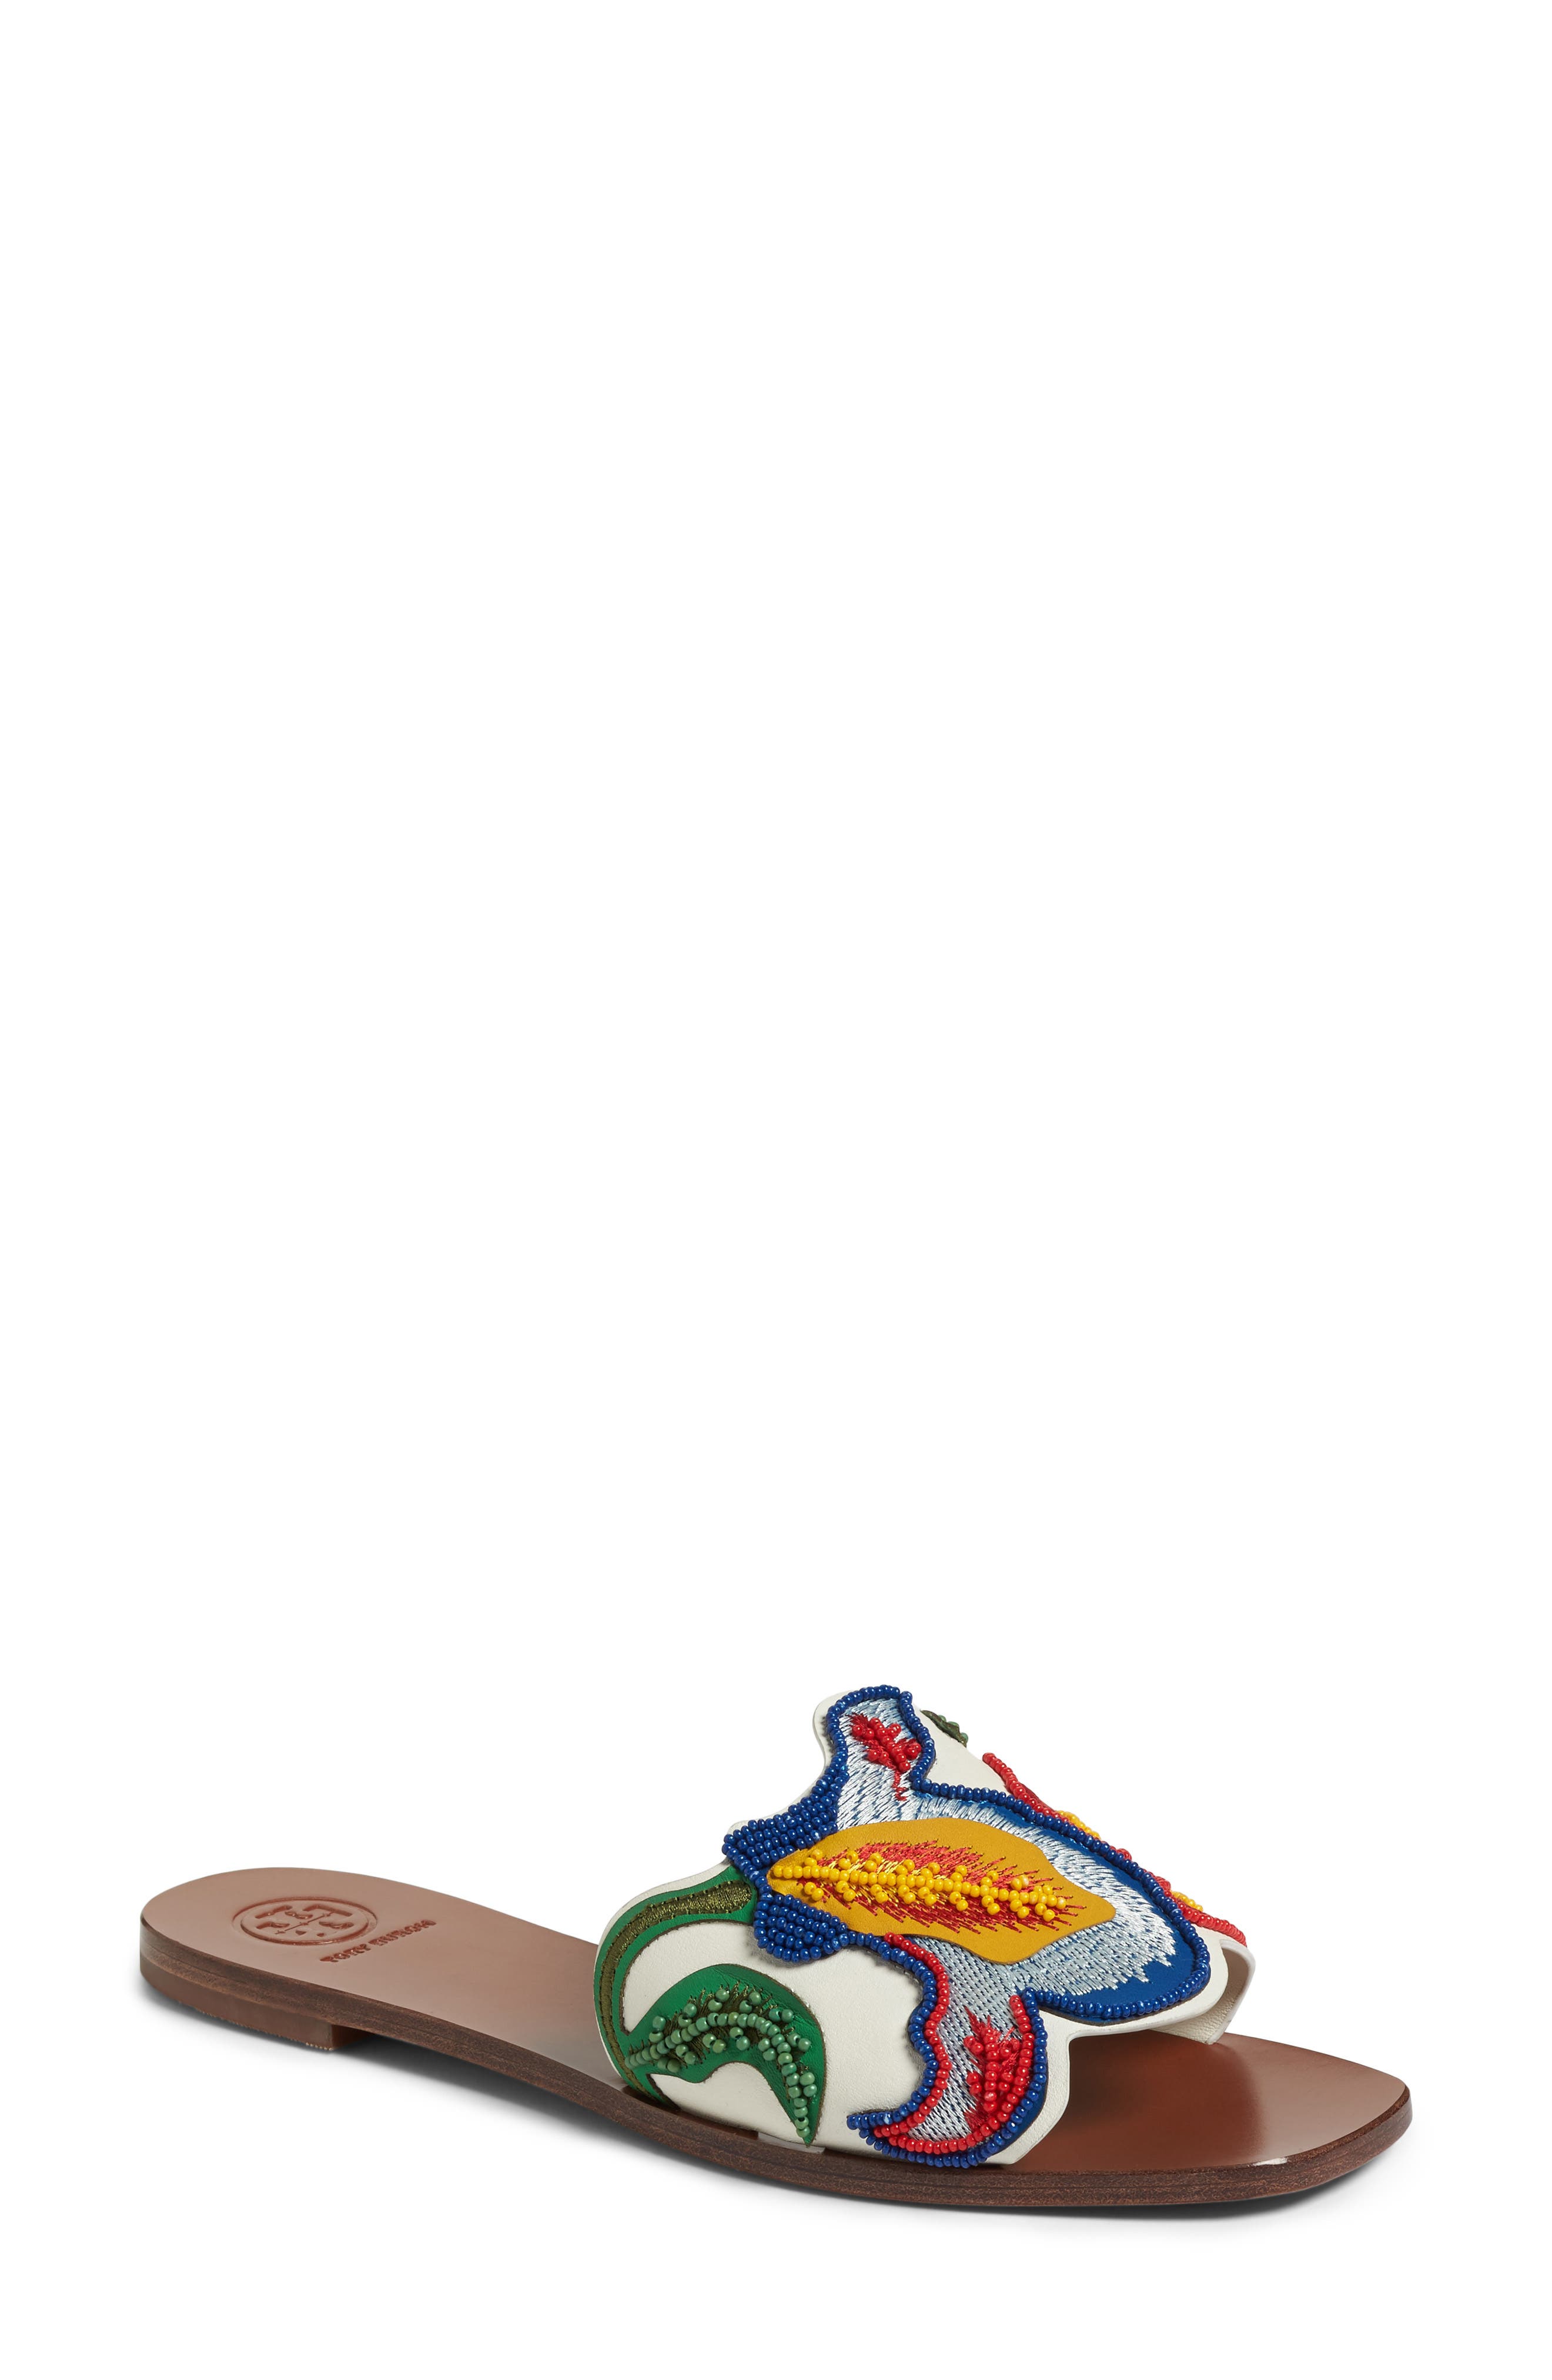 tory burch sandals colors